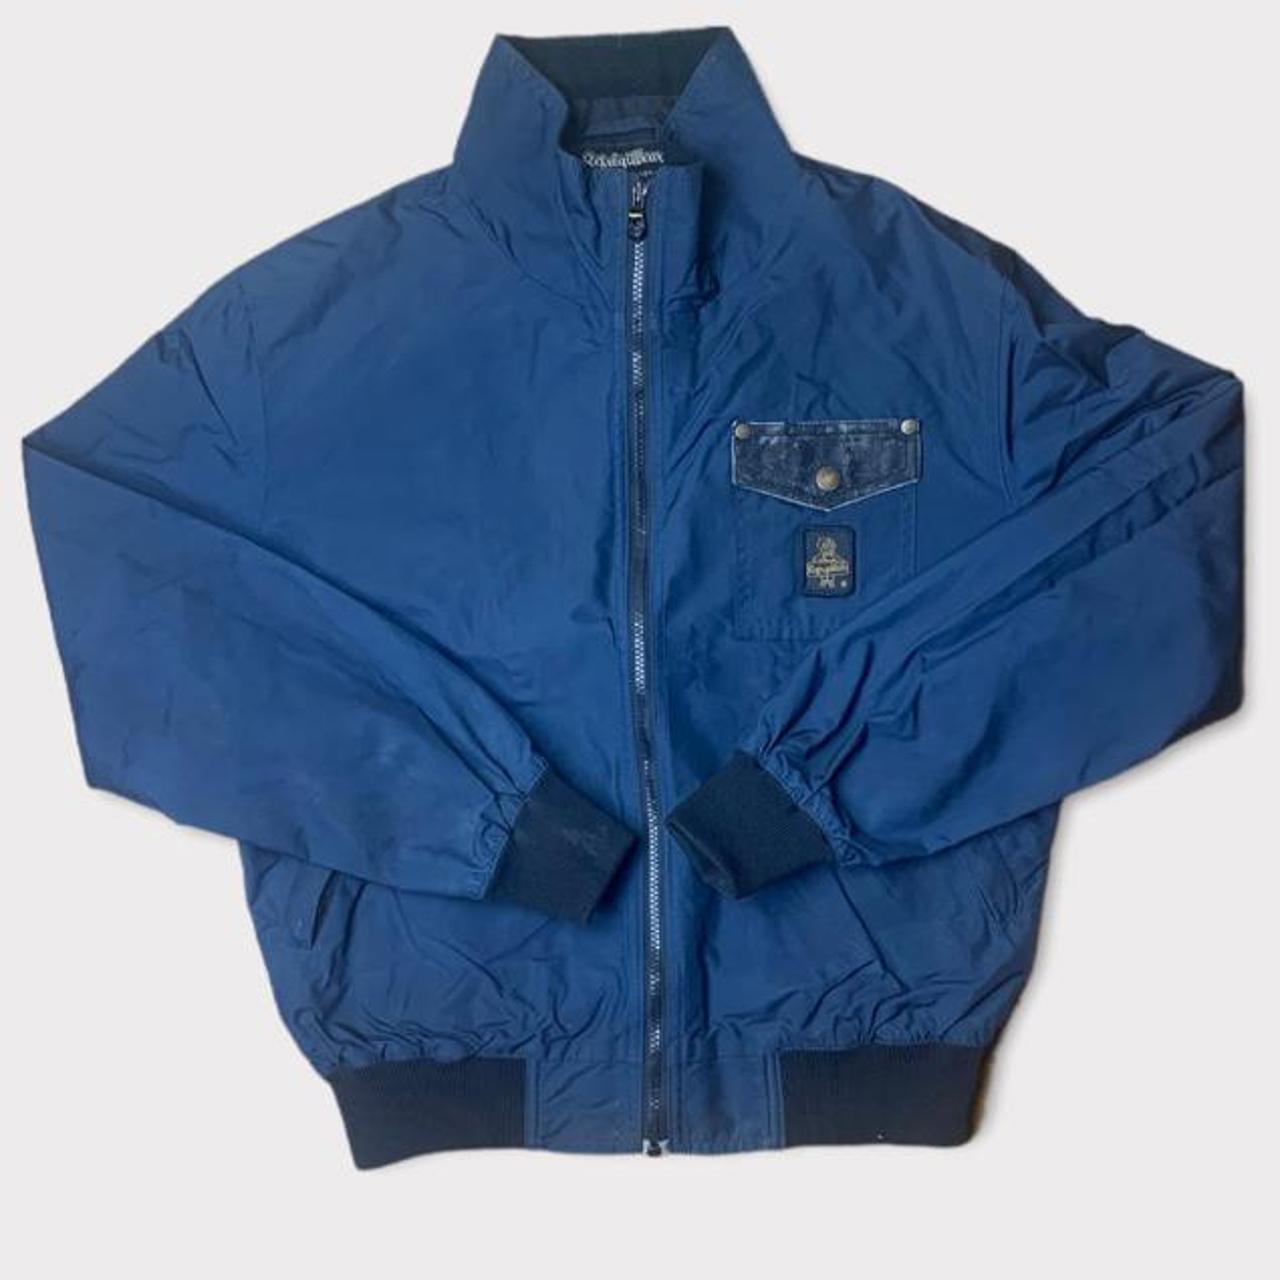 Refrigiwear Navy Bomber Jacket Coat 📏Size on Label:... - Depop